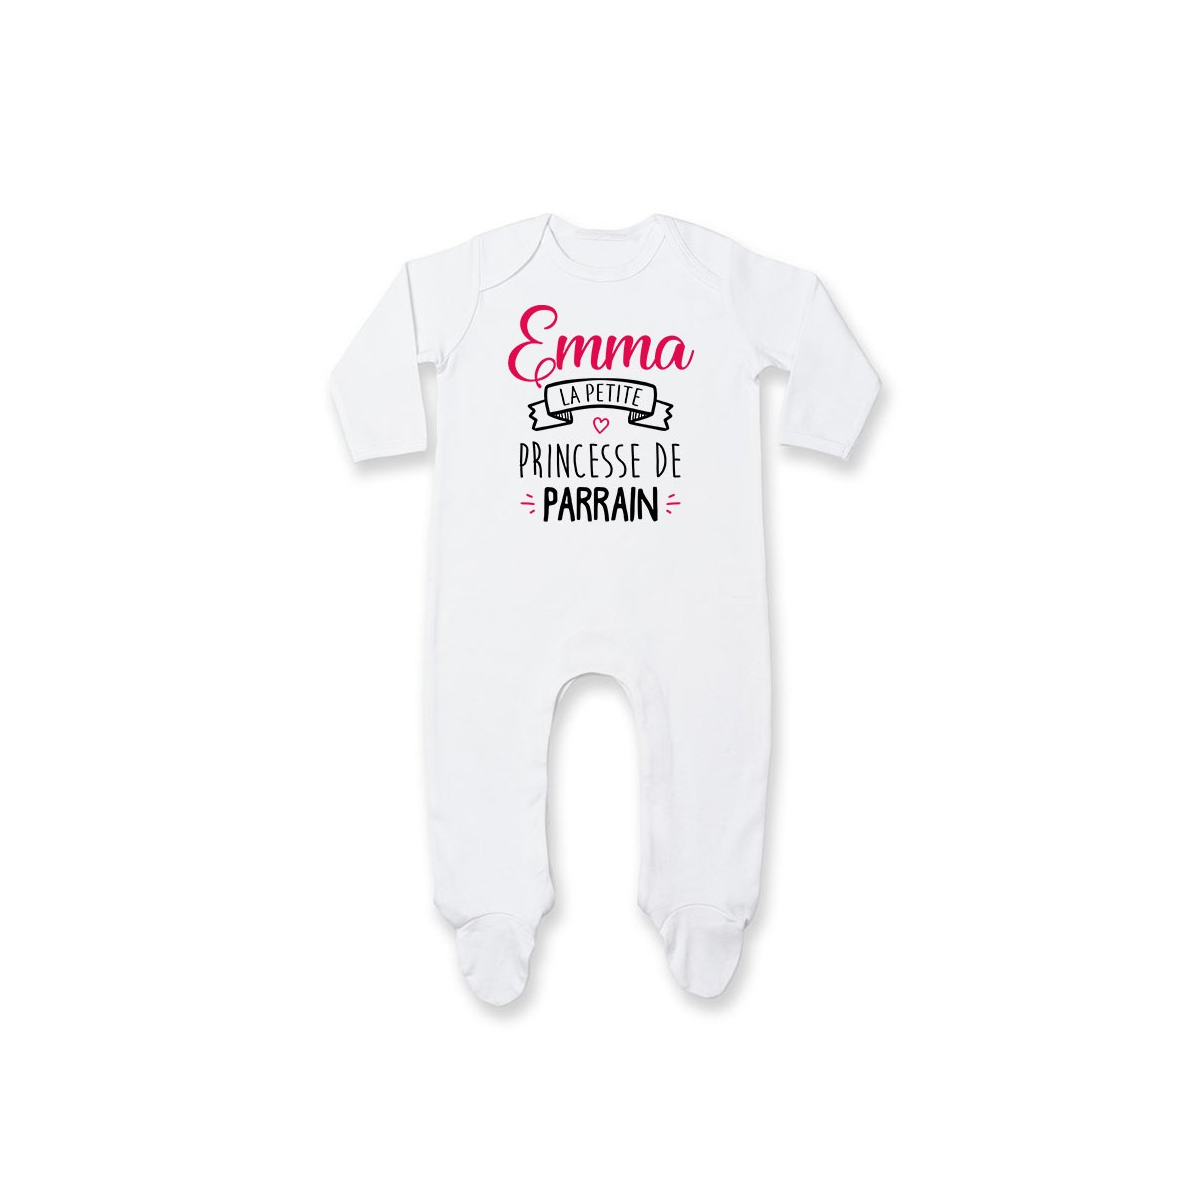 Pyjama bébé personnalisé " Prénom " la petite princesse de parrain